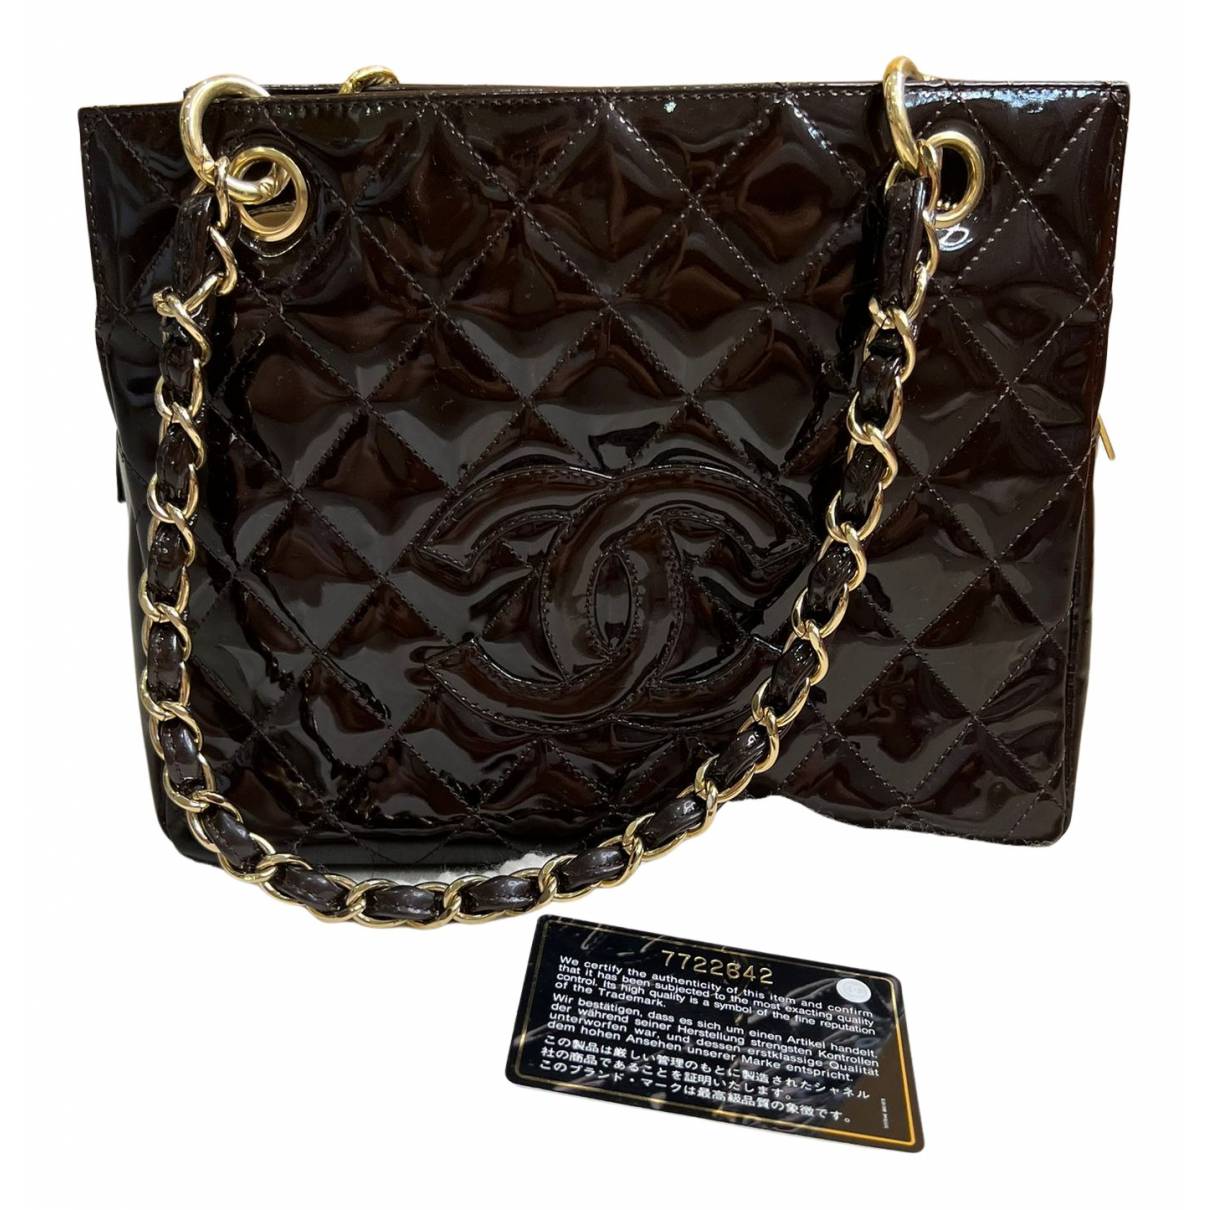 Petite Shopping Tote leather handbag